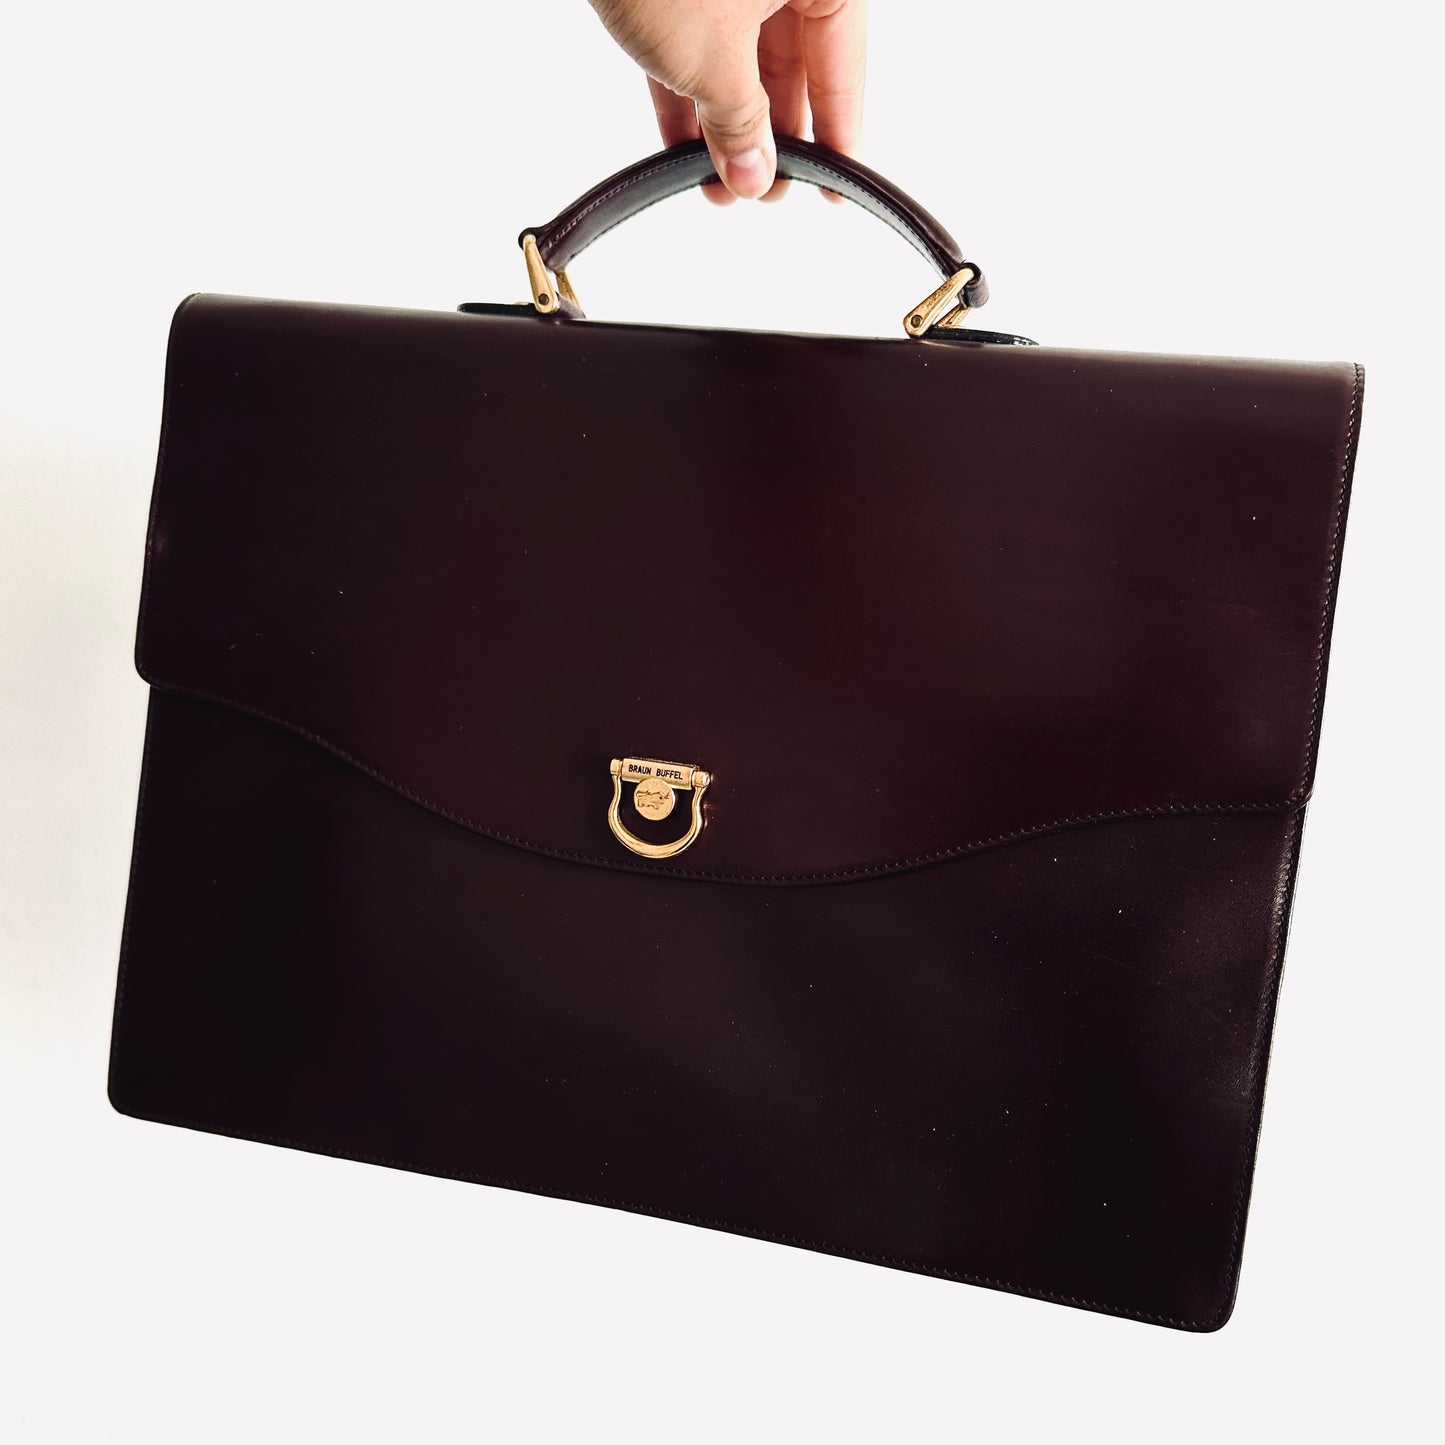 Braun Buffel Dark Chocolate Brown GHW Leather Structured Flap Briefcase Top Handle Bag